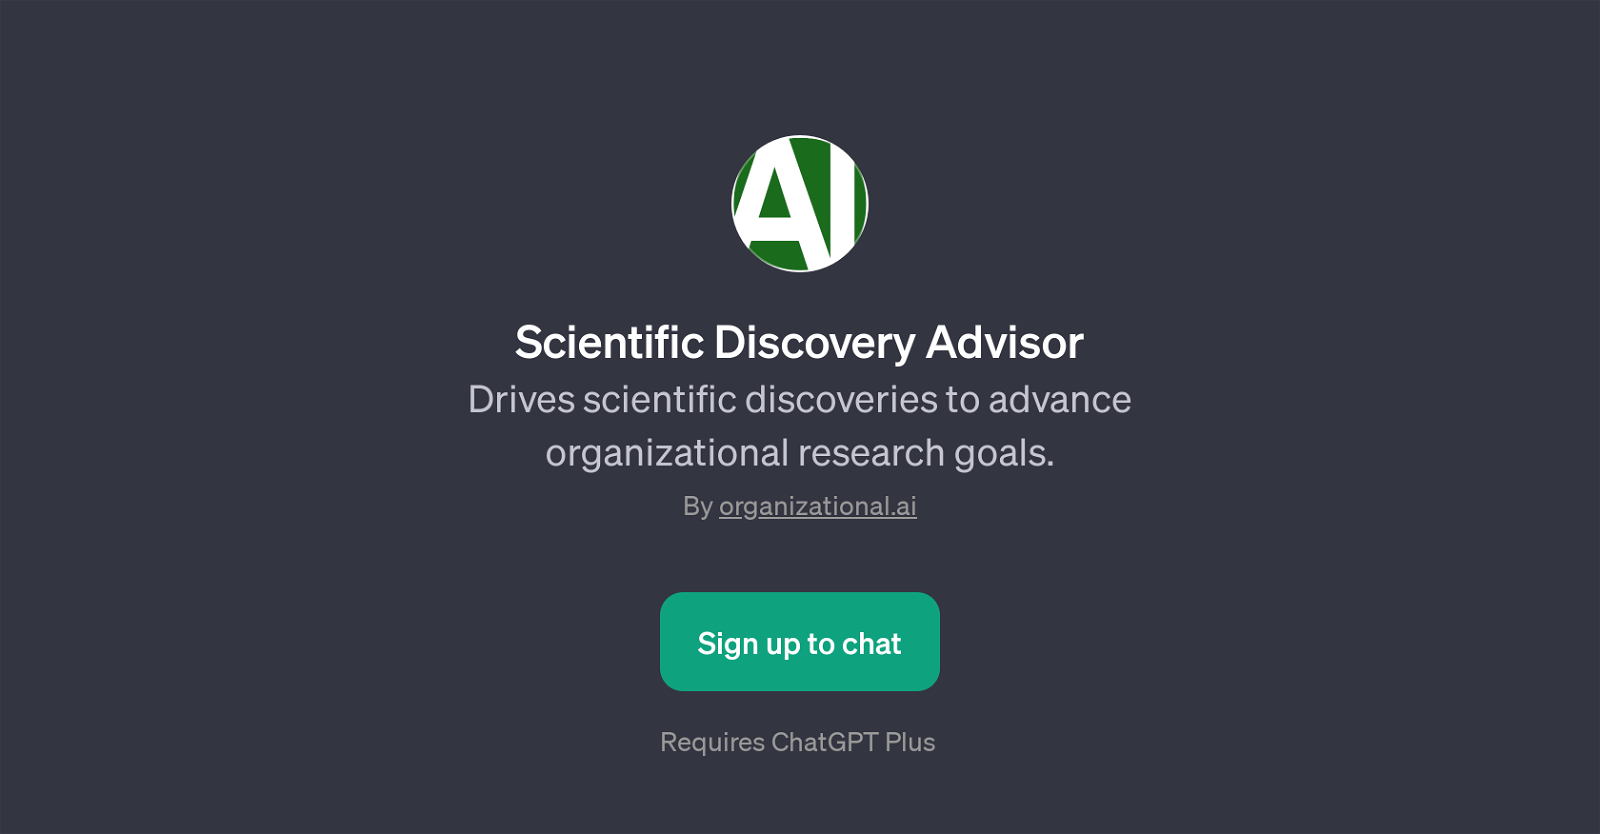 Scientific Discovery Advisor website